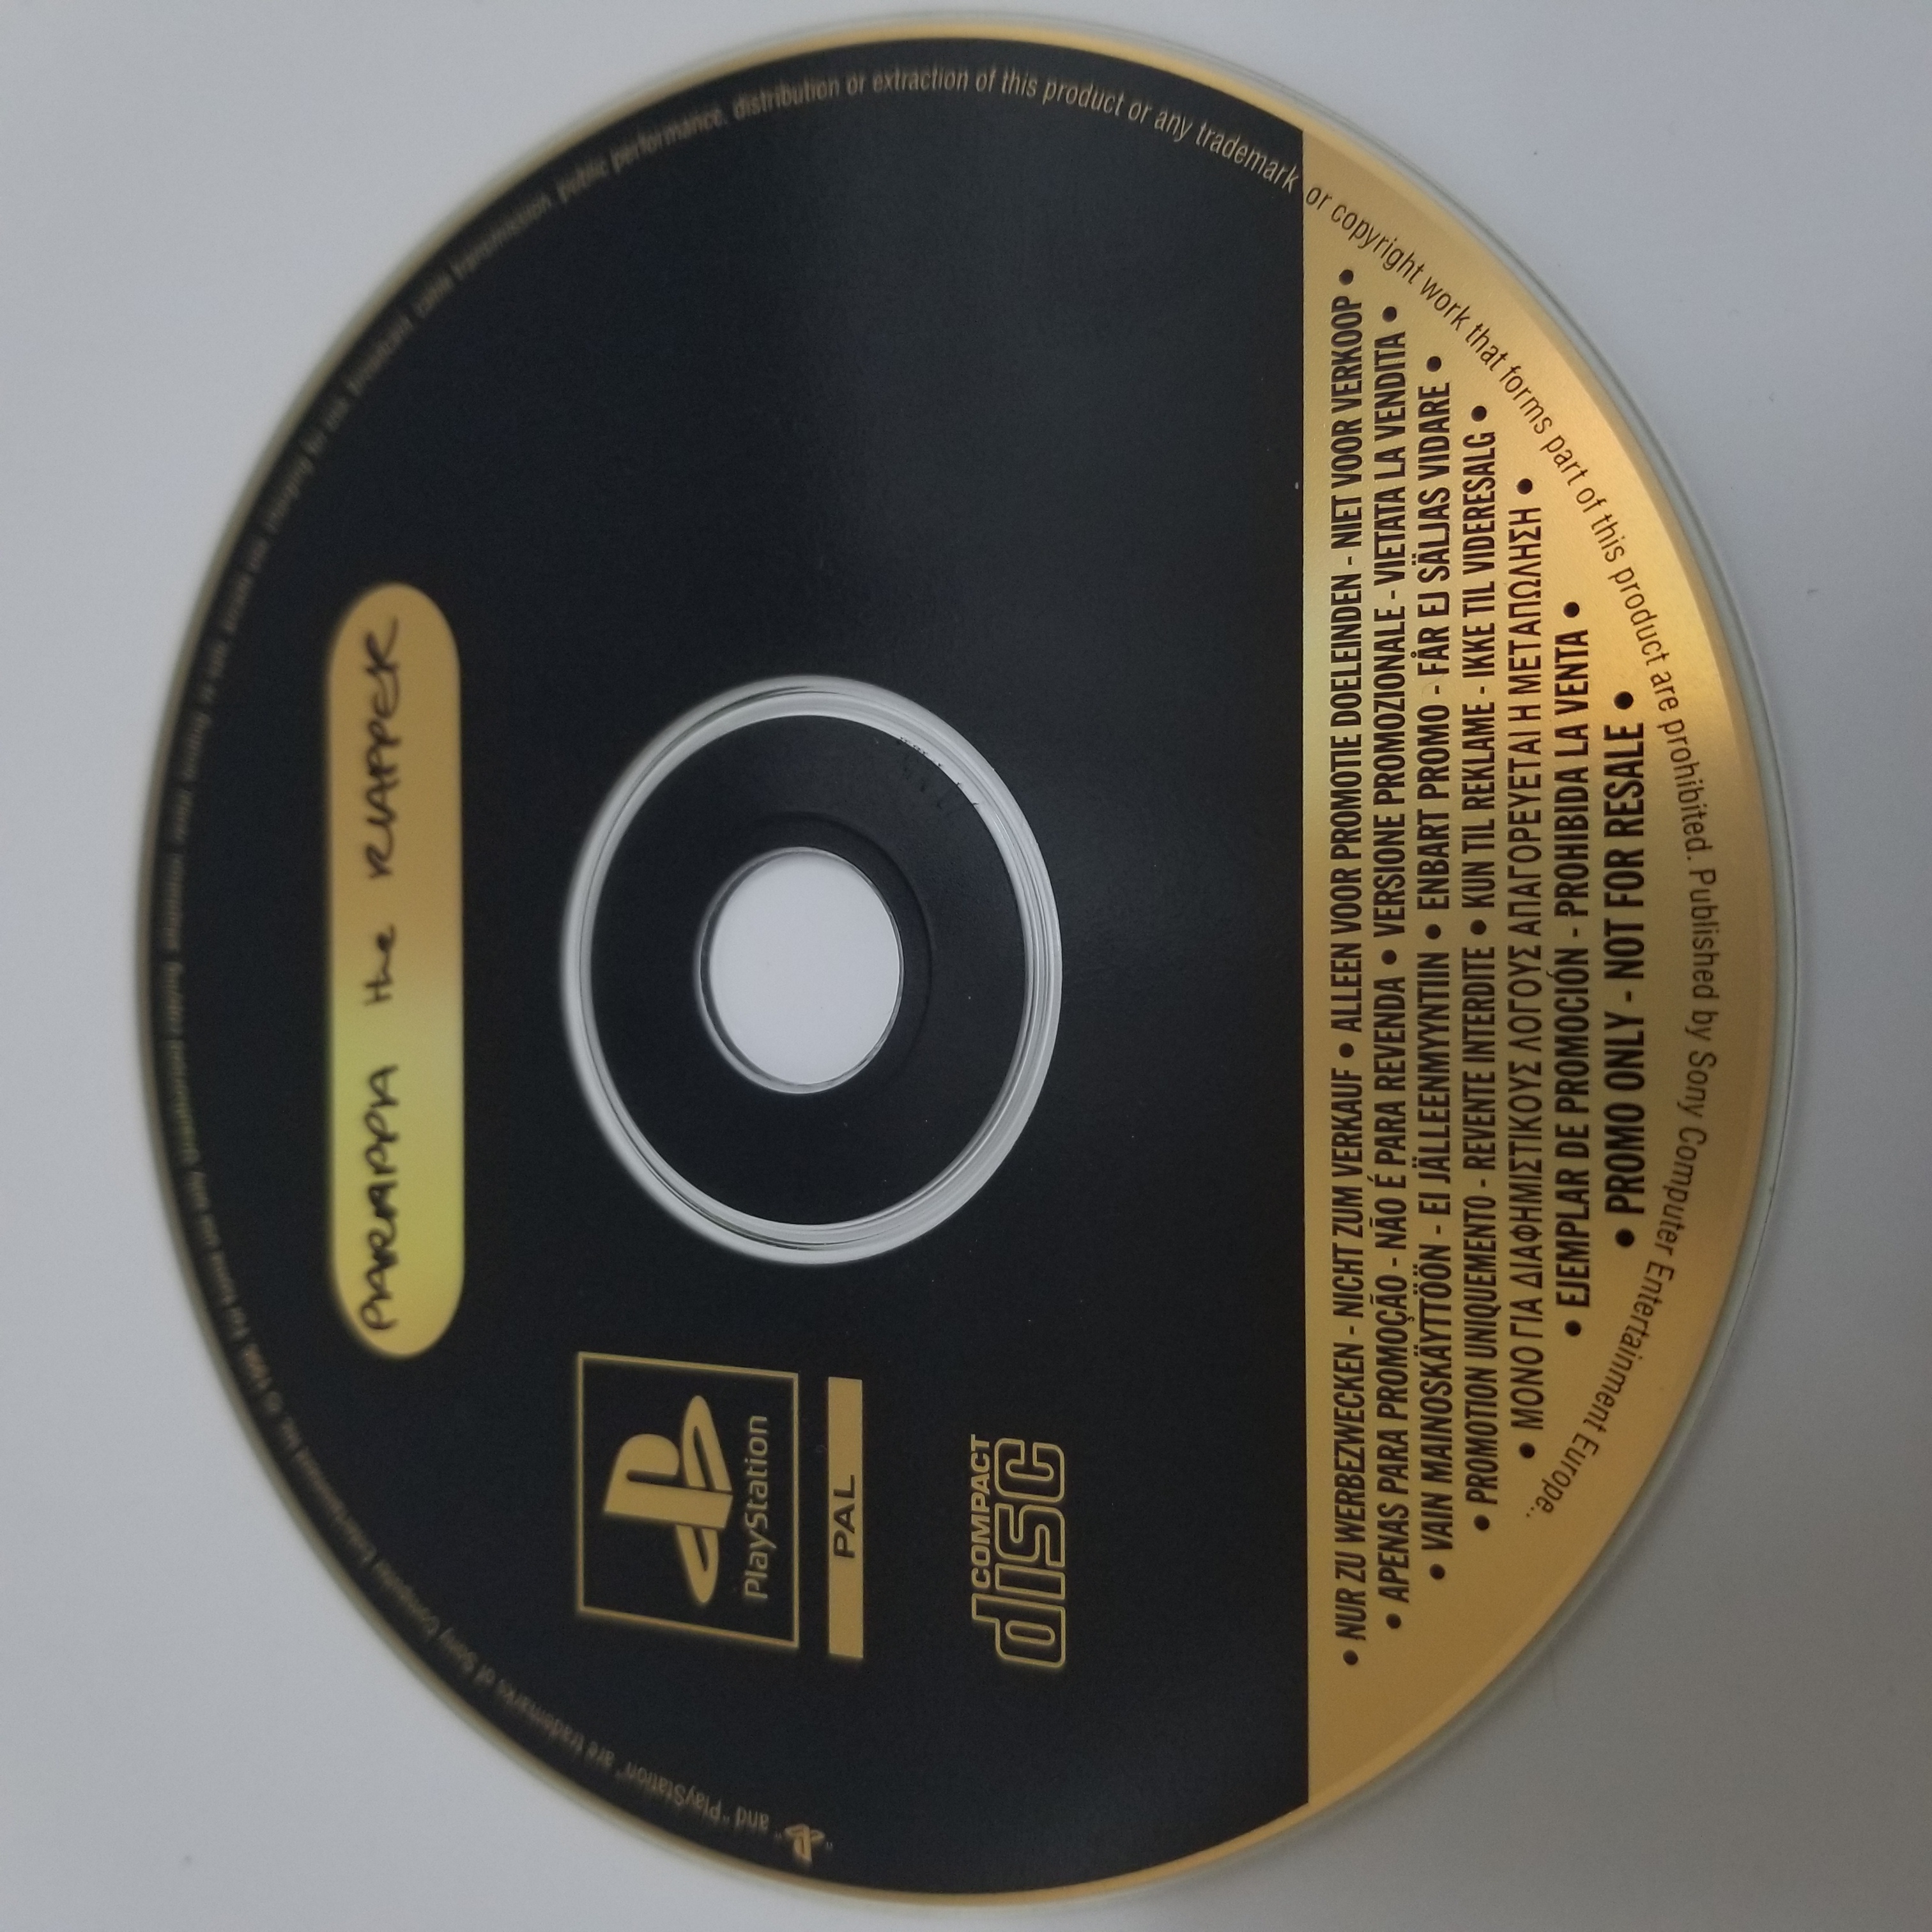 Parappa The Rapper CD-ROM Desktop Accesaries Digicube DTA Series